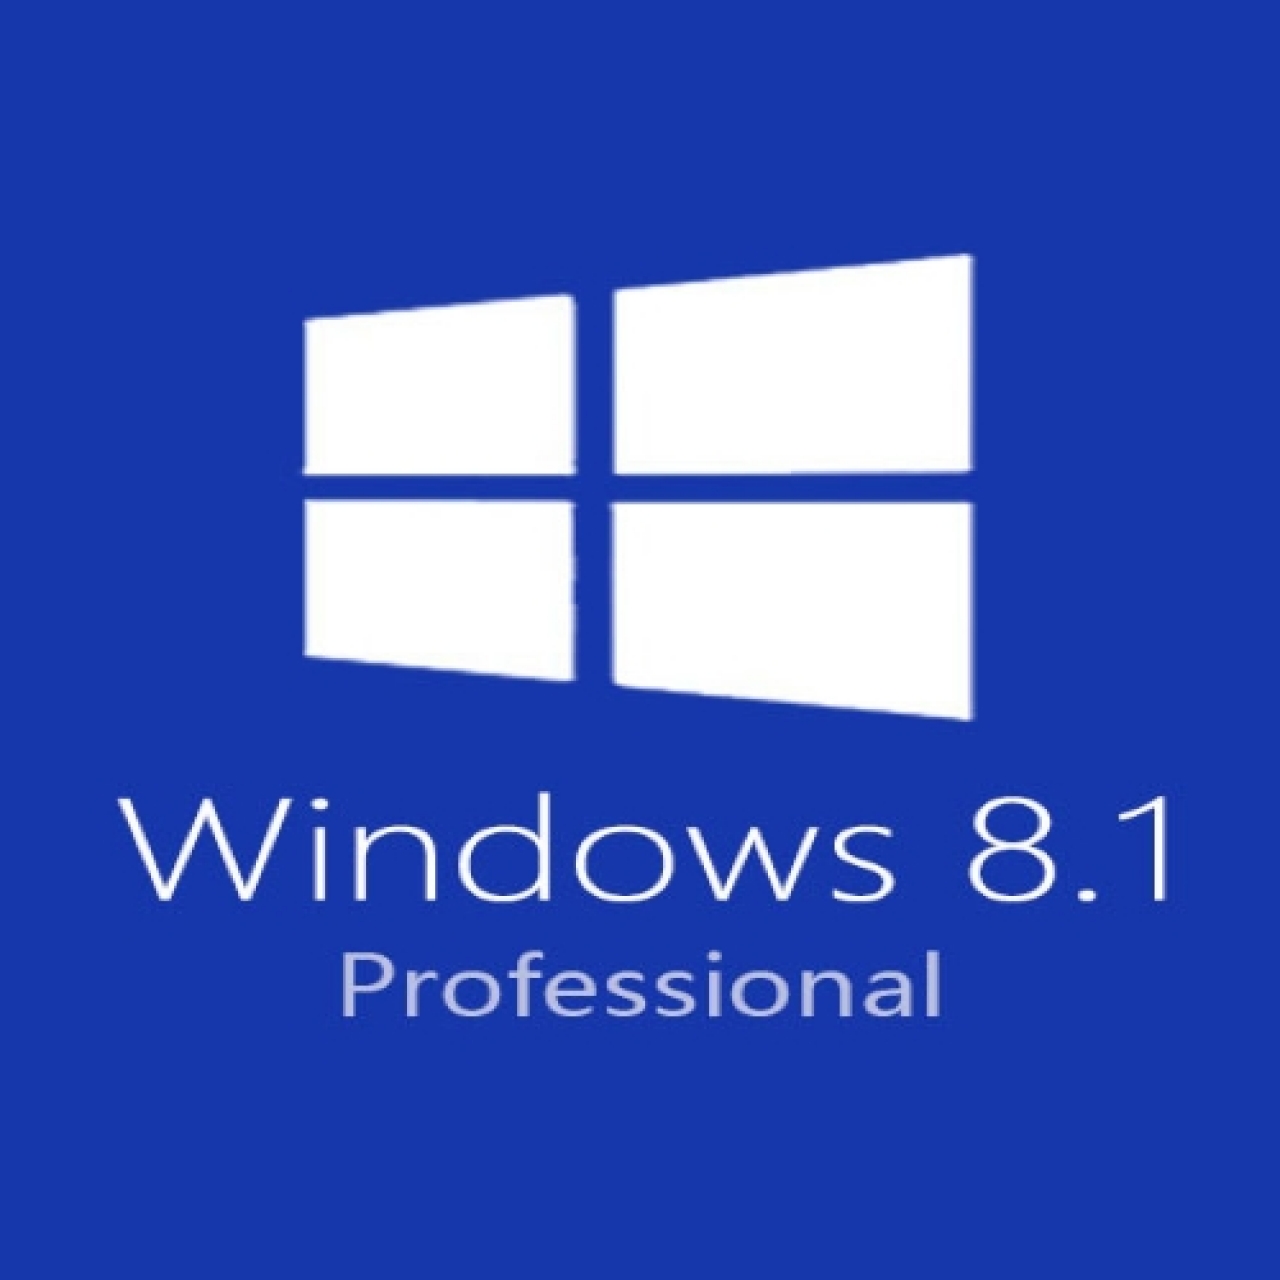 Windows 8.1 Pro. Lisans Anahtarı - OEM KEY